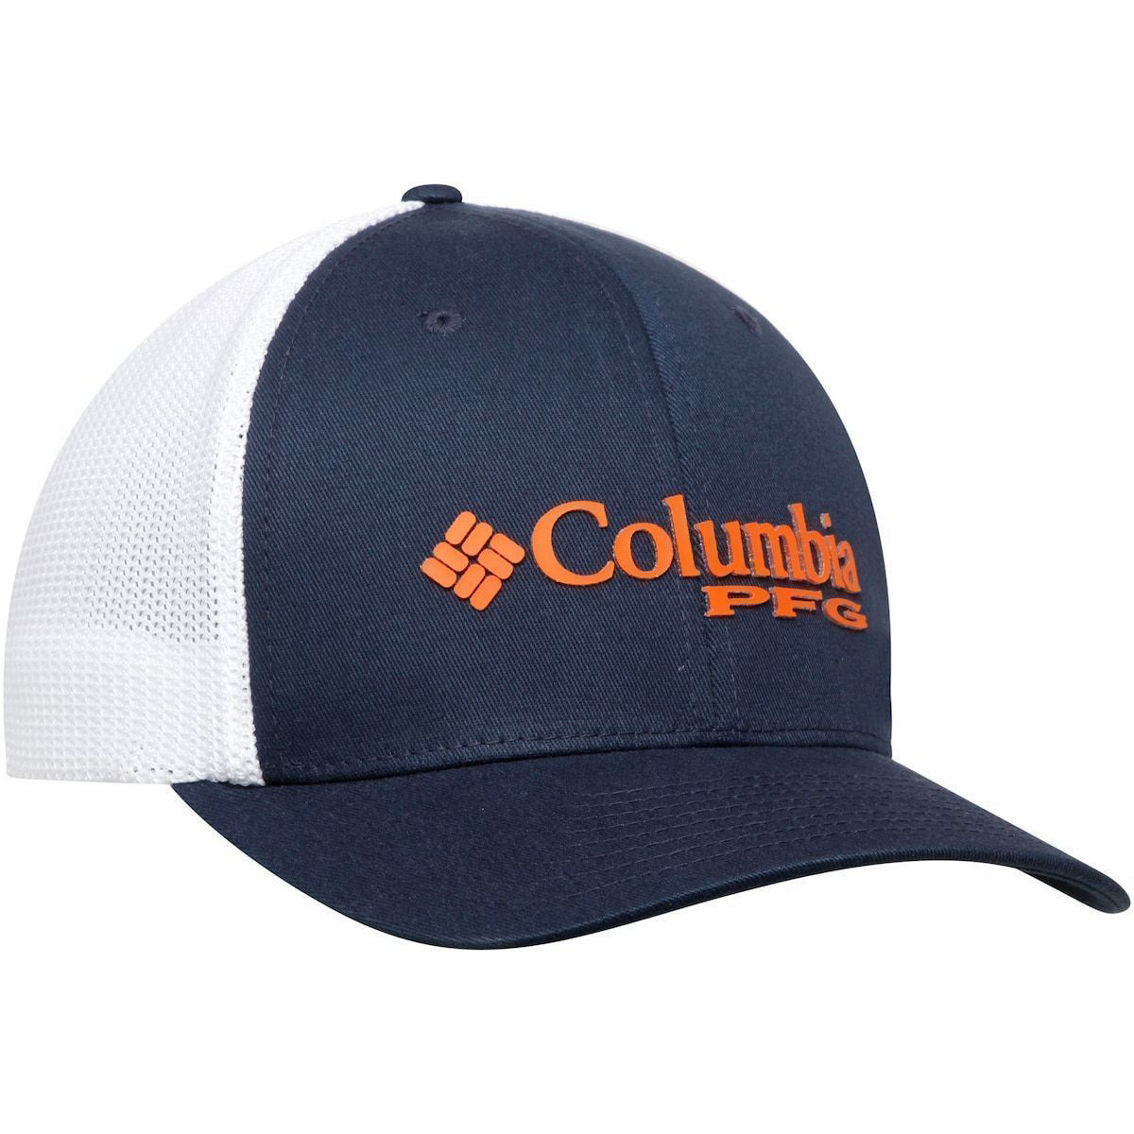 Men's Columbia Navy Auburn Tigers Collegiate PFG Flex Hat - Image 4 of 4